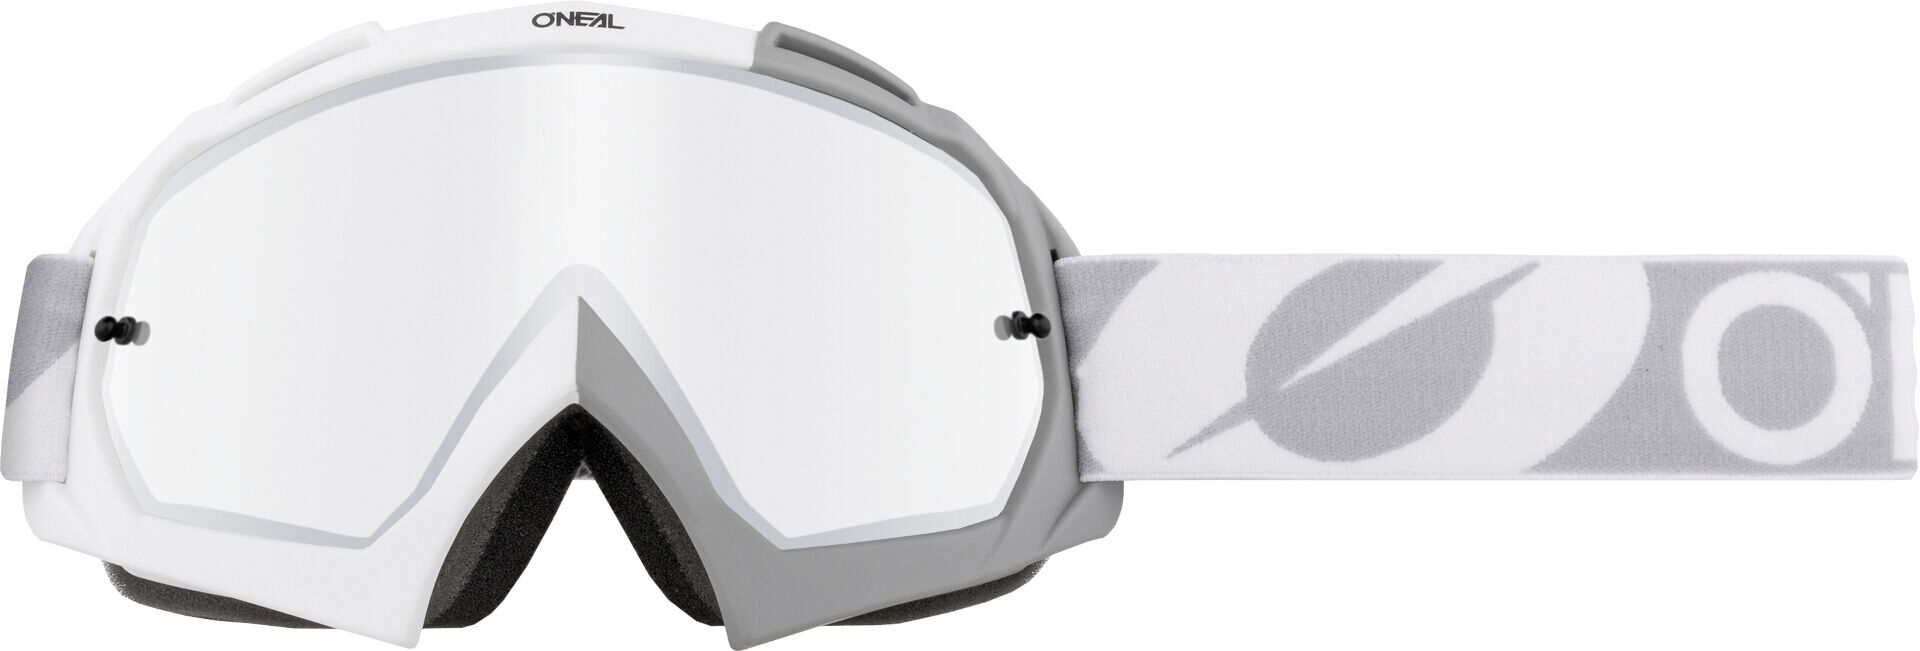 Oneal B-10 Twoface Silver Mirror Gafas de Motocross - Gris Blanco (un tamaño)